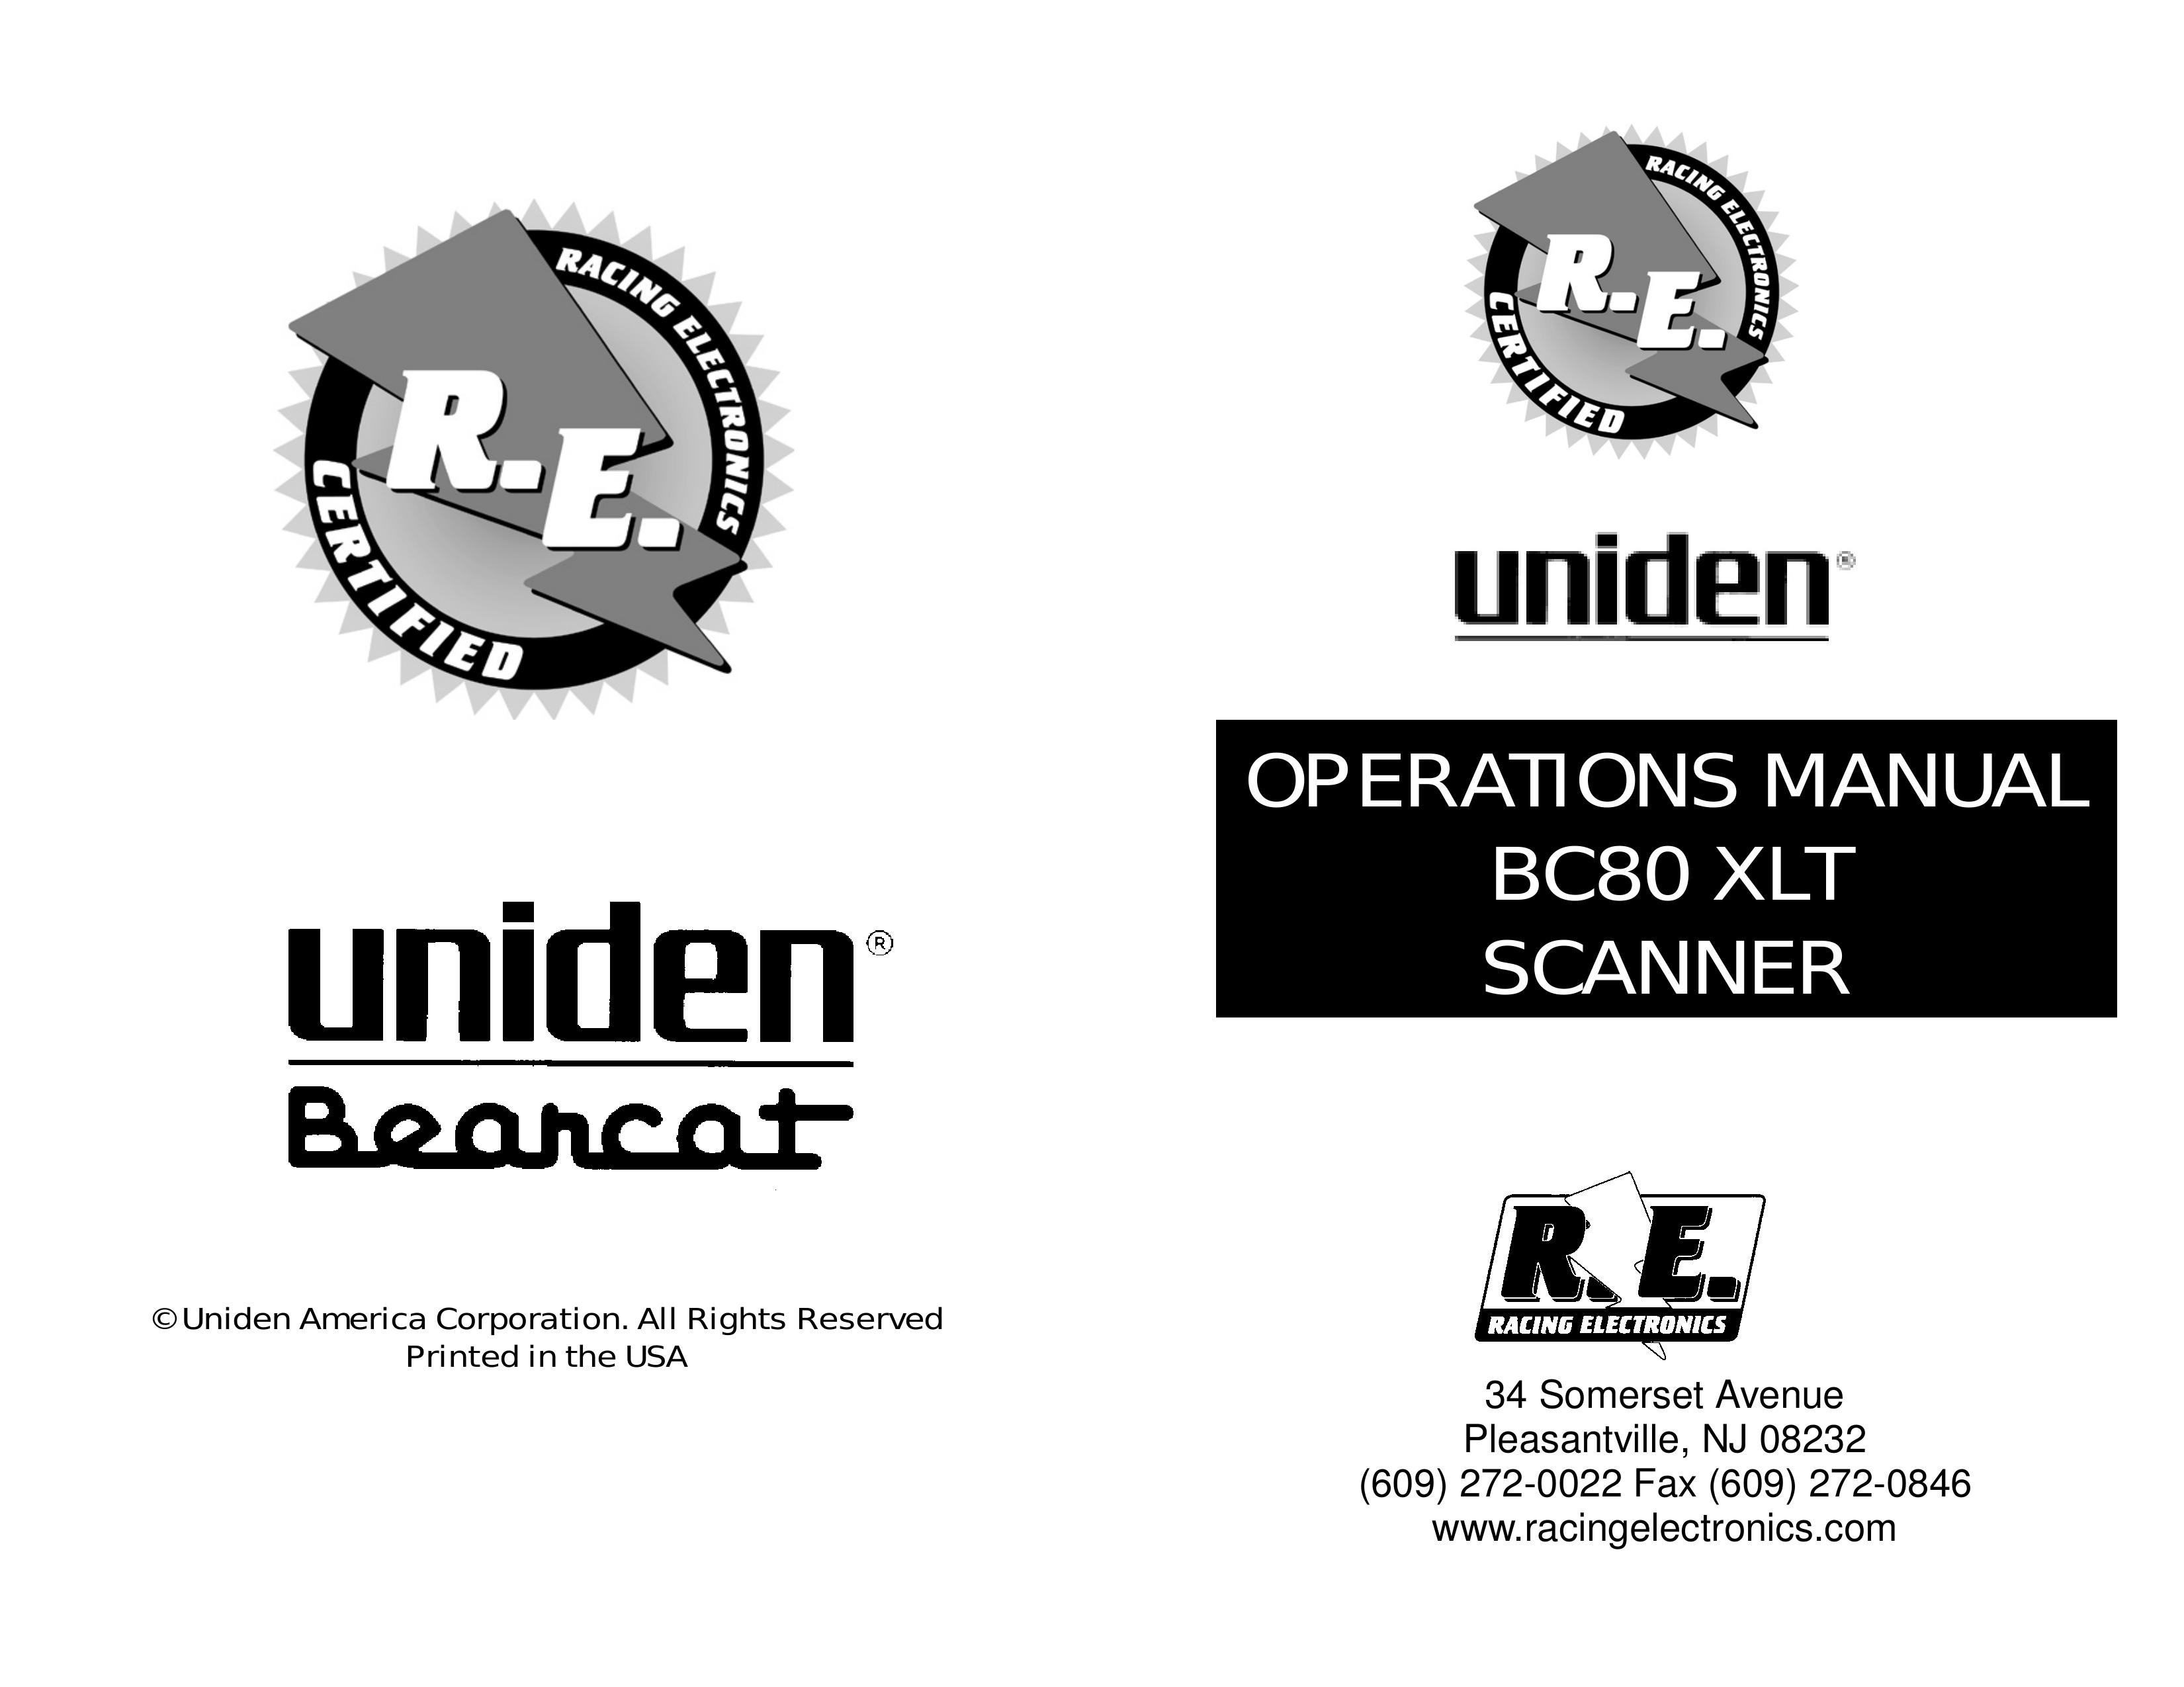 Uniden BC80 XLT Photo Scanner User Manual